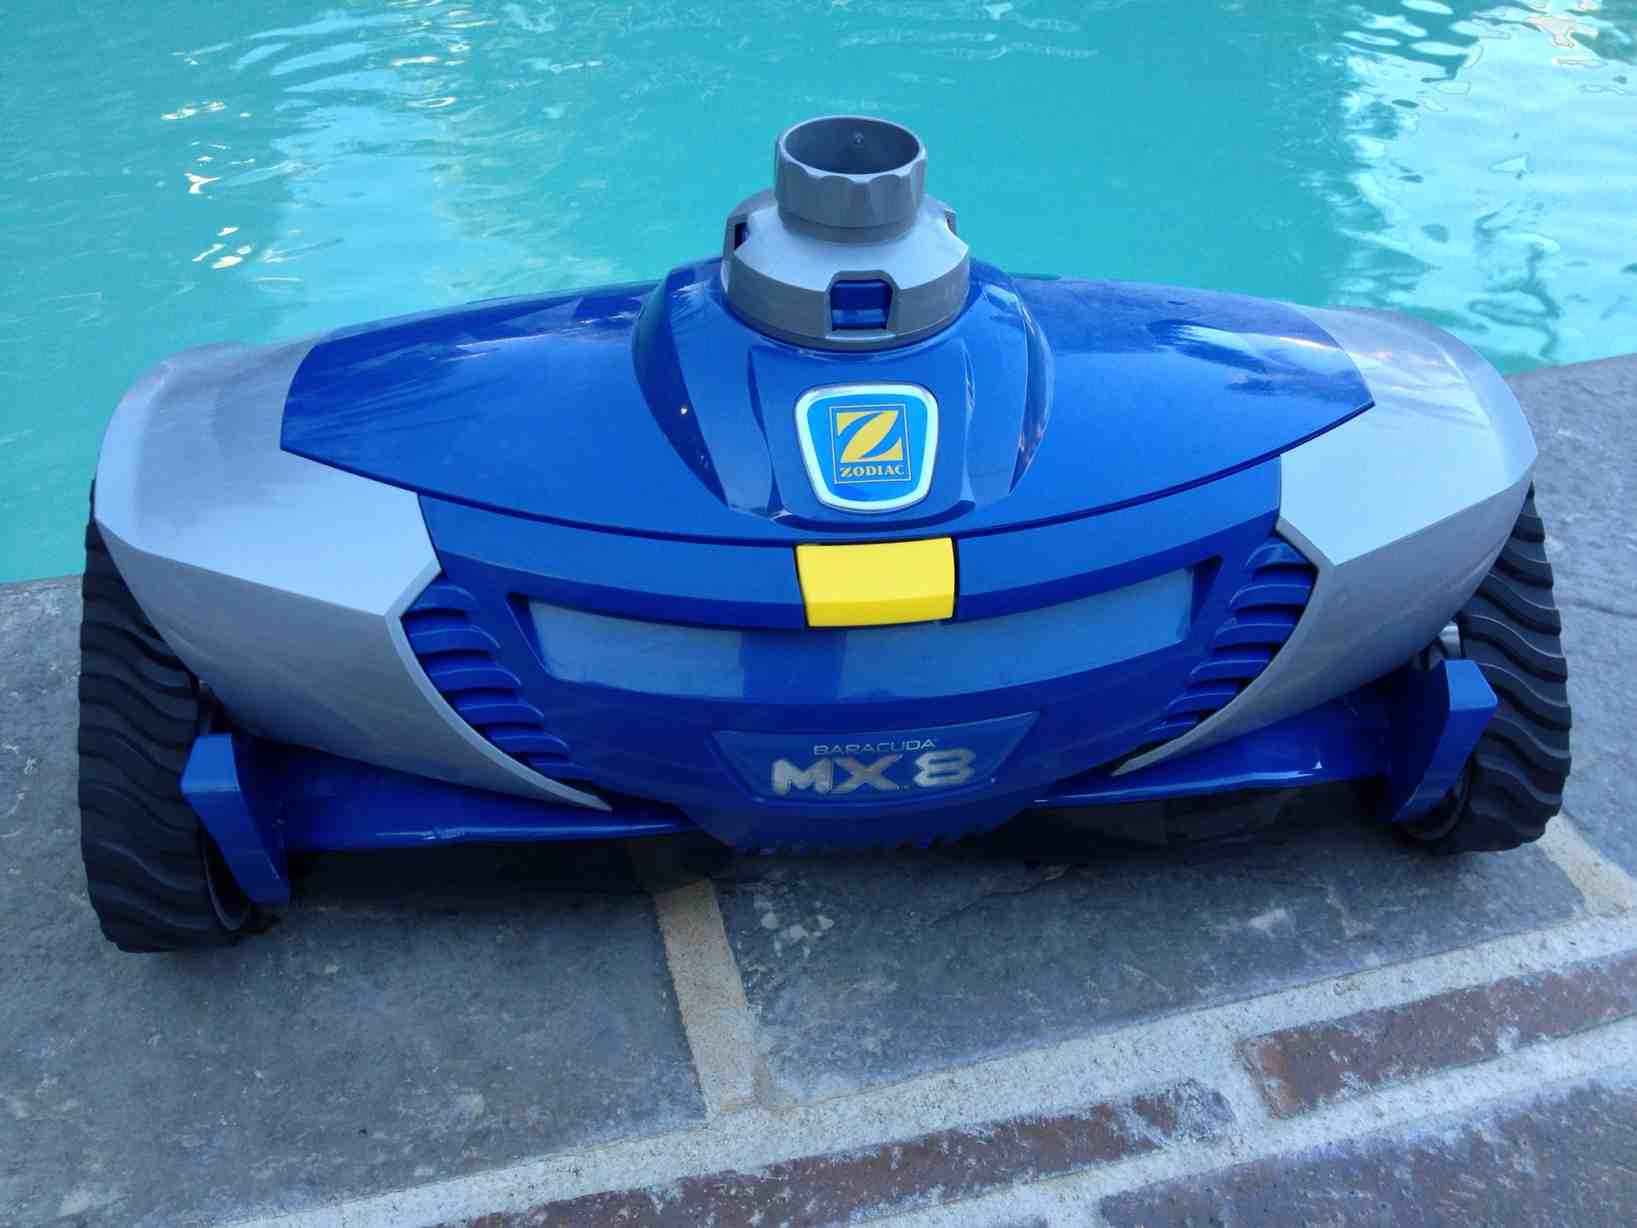 test-du-zodiac-baracuda-mx8-a-lire-avant-d-acheter-ce-robot-piscine